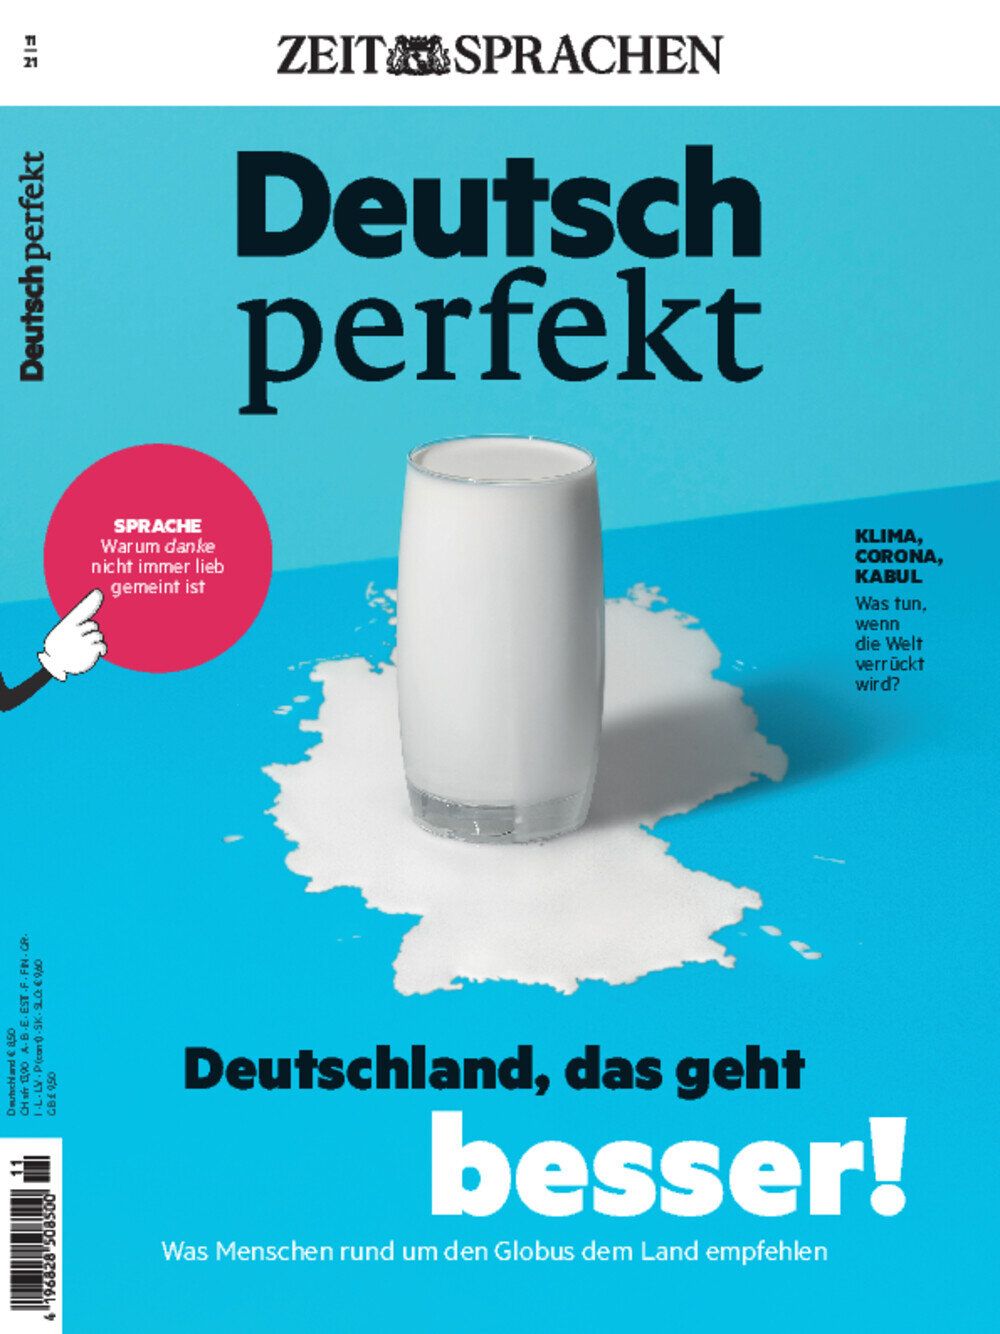 Deutsch perfekt ePaper 11/2021